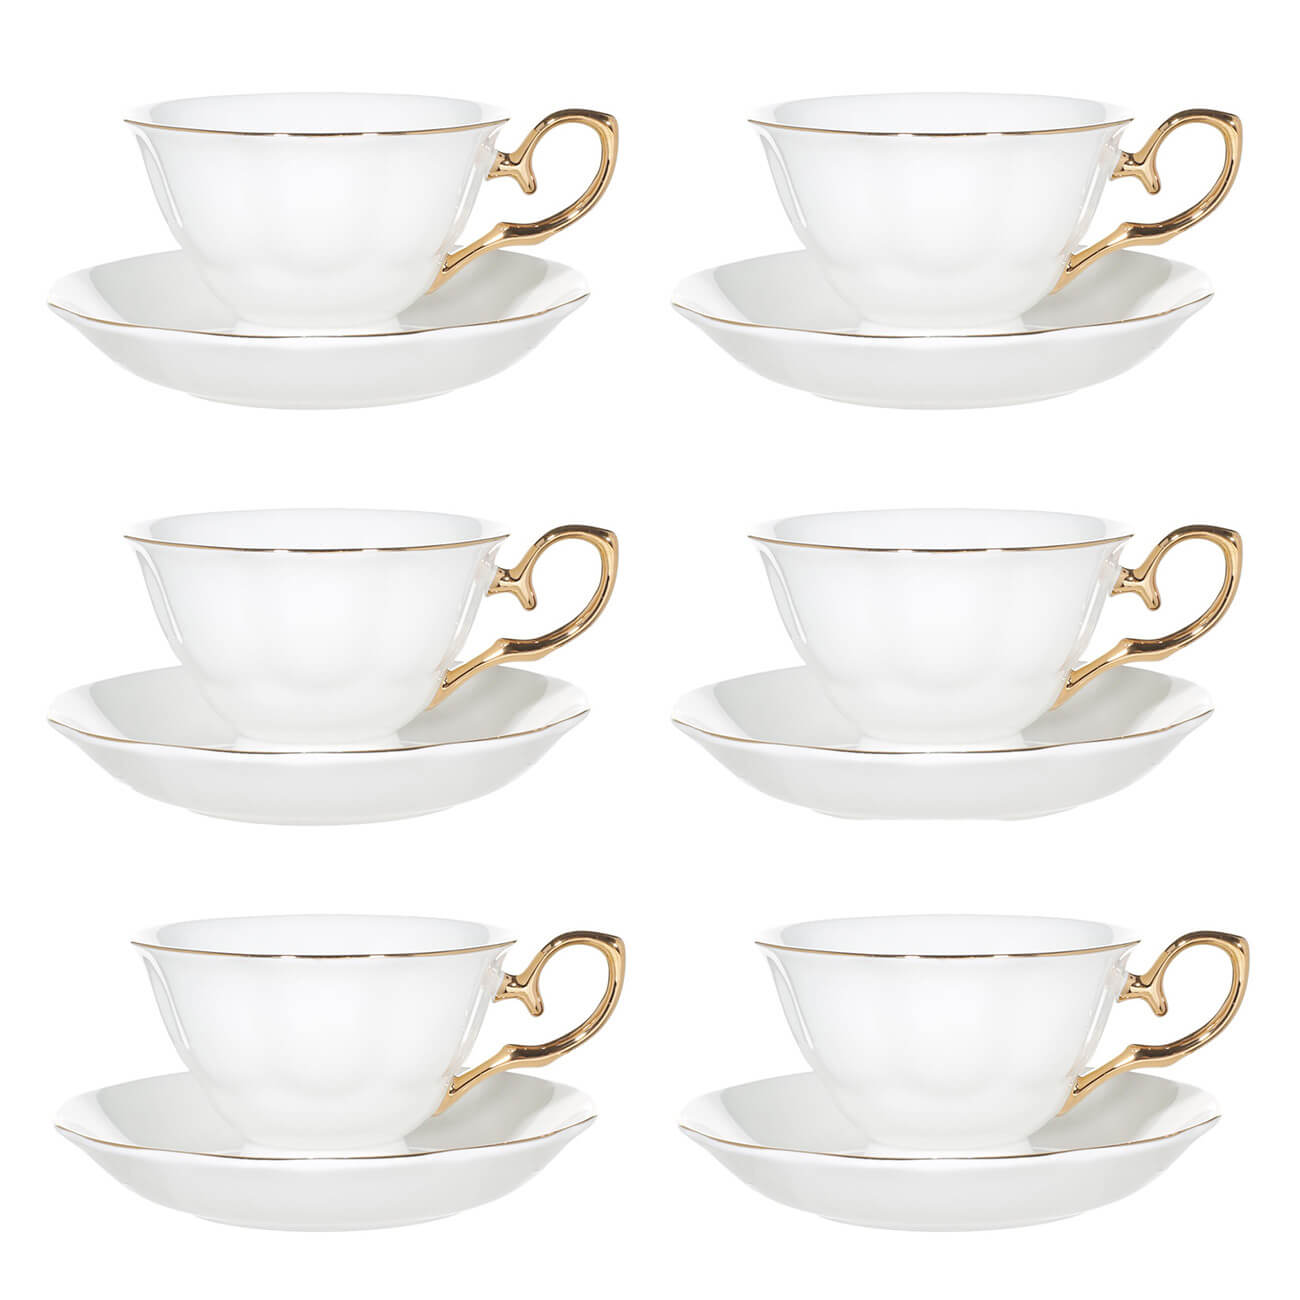 Пара чайная, 6 перс, 12 пр, 180 мл, фарфор F, бело-золотистая, Premium Gold чайная пара french garden 200 мл бело розовый